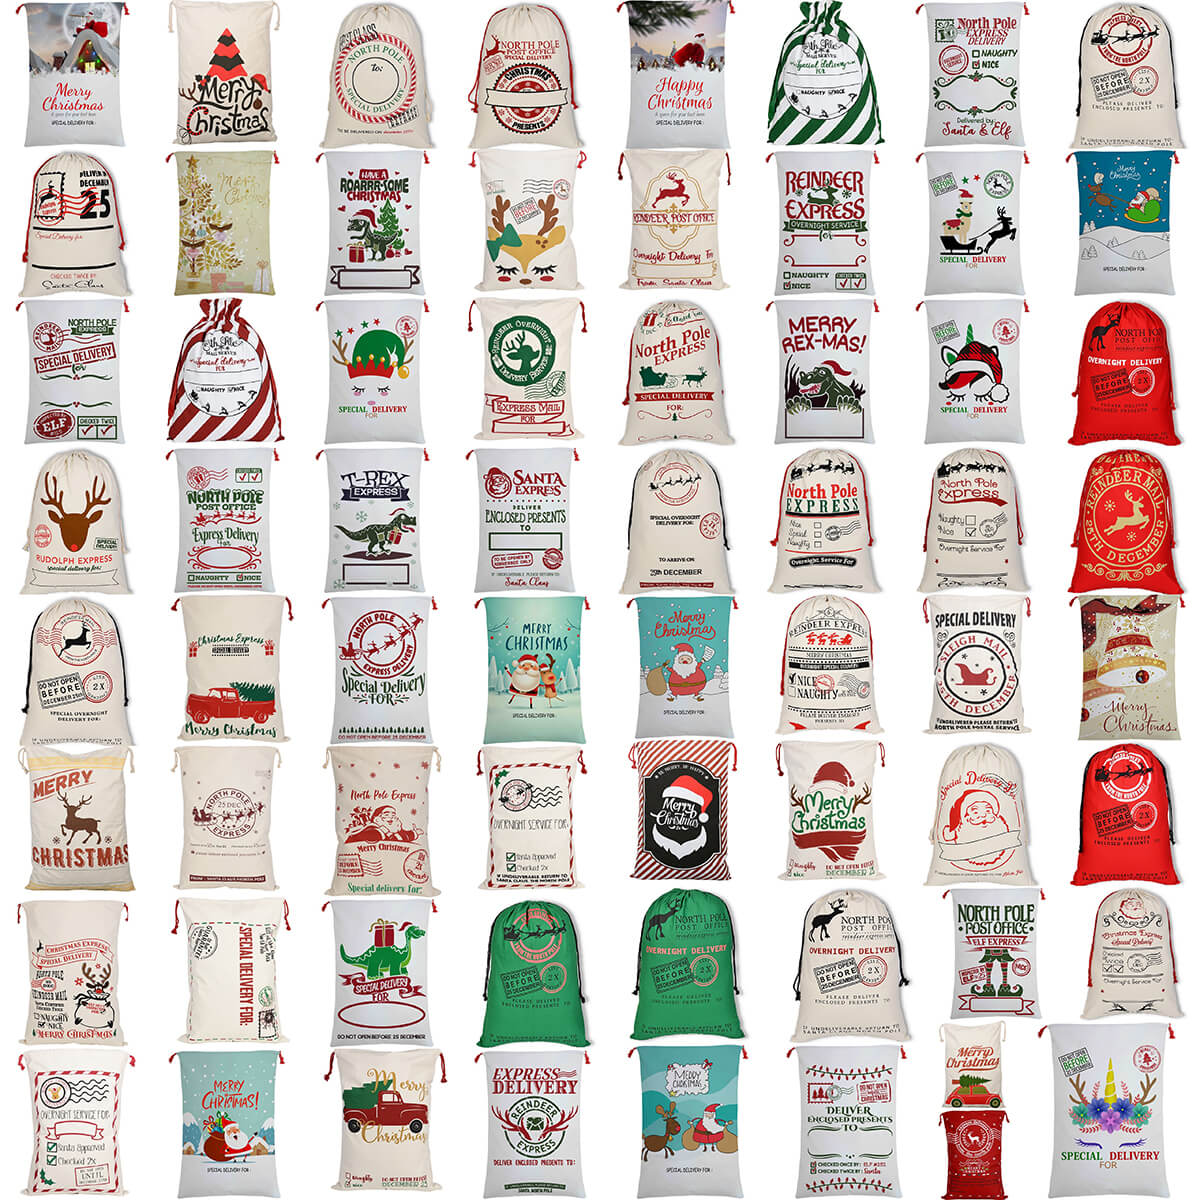 Large Christmas XMAS Hessian Santa Sack Stocking Bag Reindeer Children Gifts Bag, Cream - Reindeer Mail